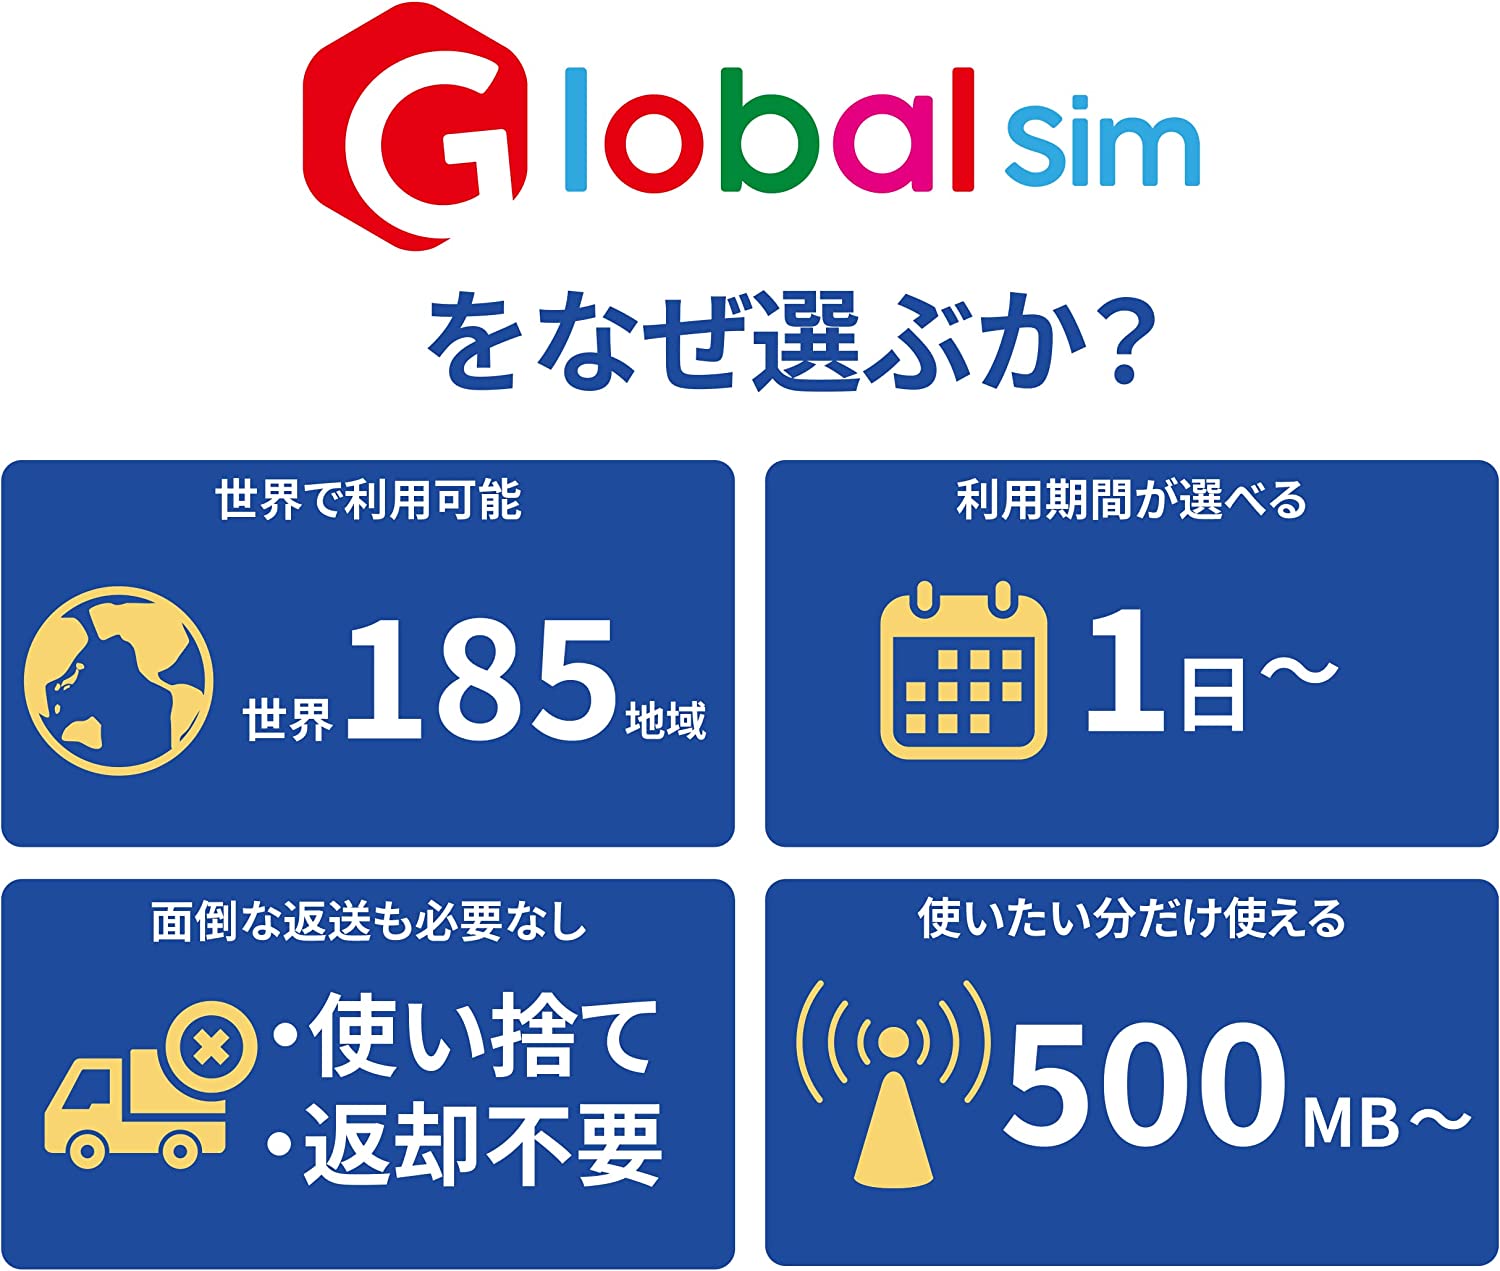 GLOBAL SIM 台湾 台北 7日間 データ無制限 (1GB 日高速）（容量を使い切っても利用期間内は最大384kbps） データ通信専用 シムフリー端末のみ対応 追加費用なし・契約不要